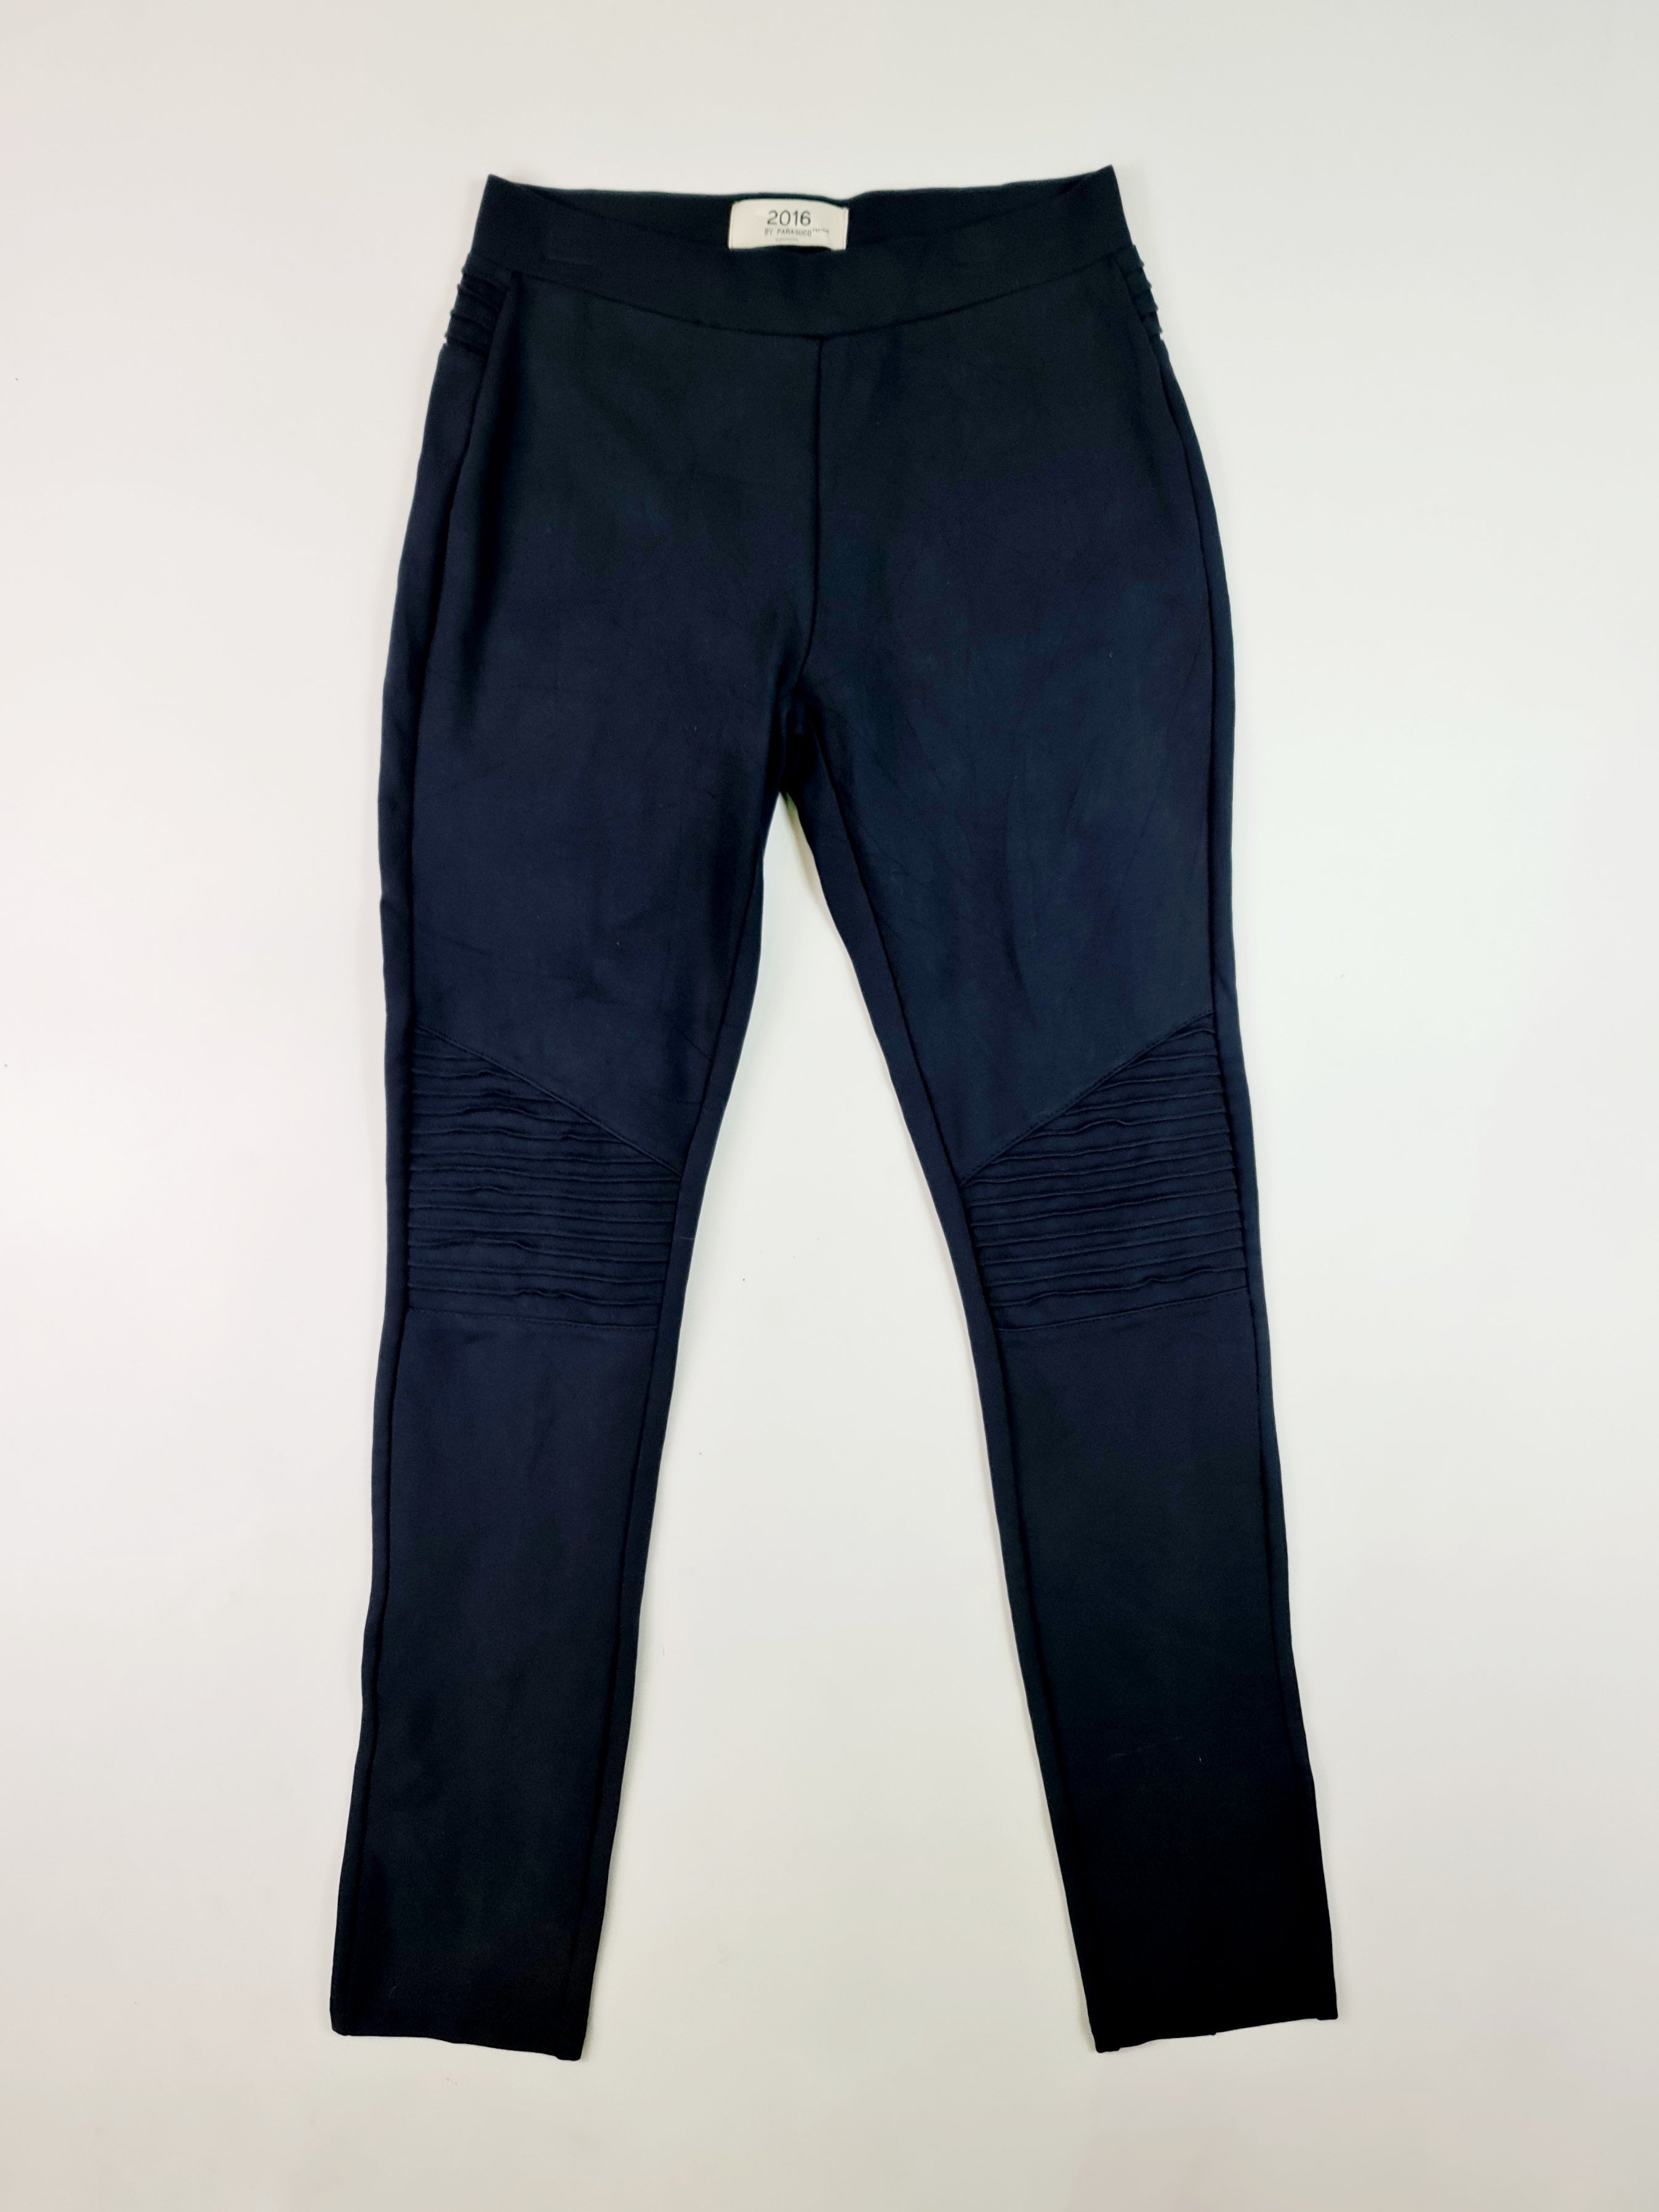 Pantalones, Parasuco - Gris oscuro (Talla: S/P)